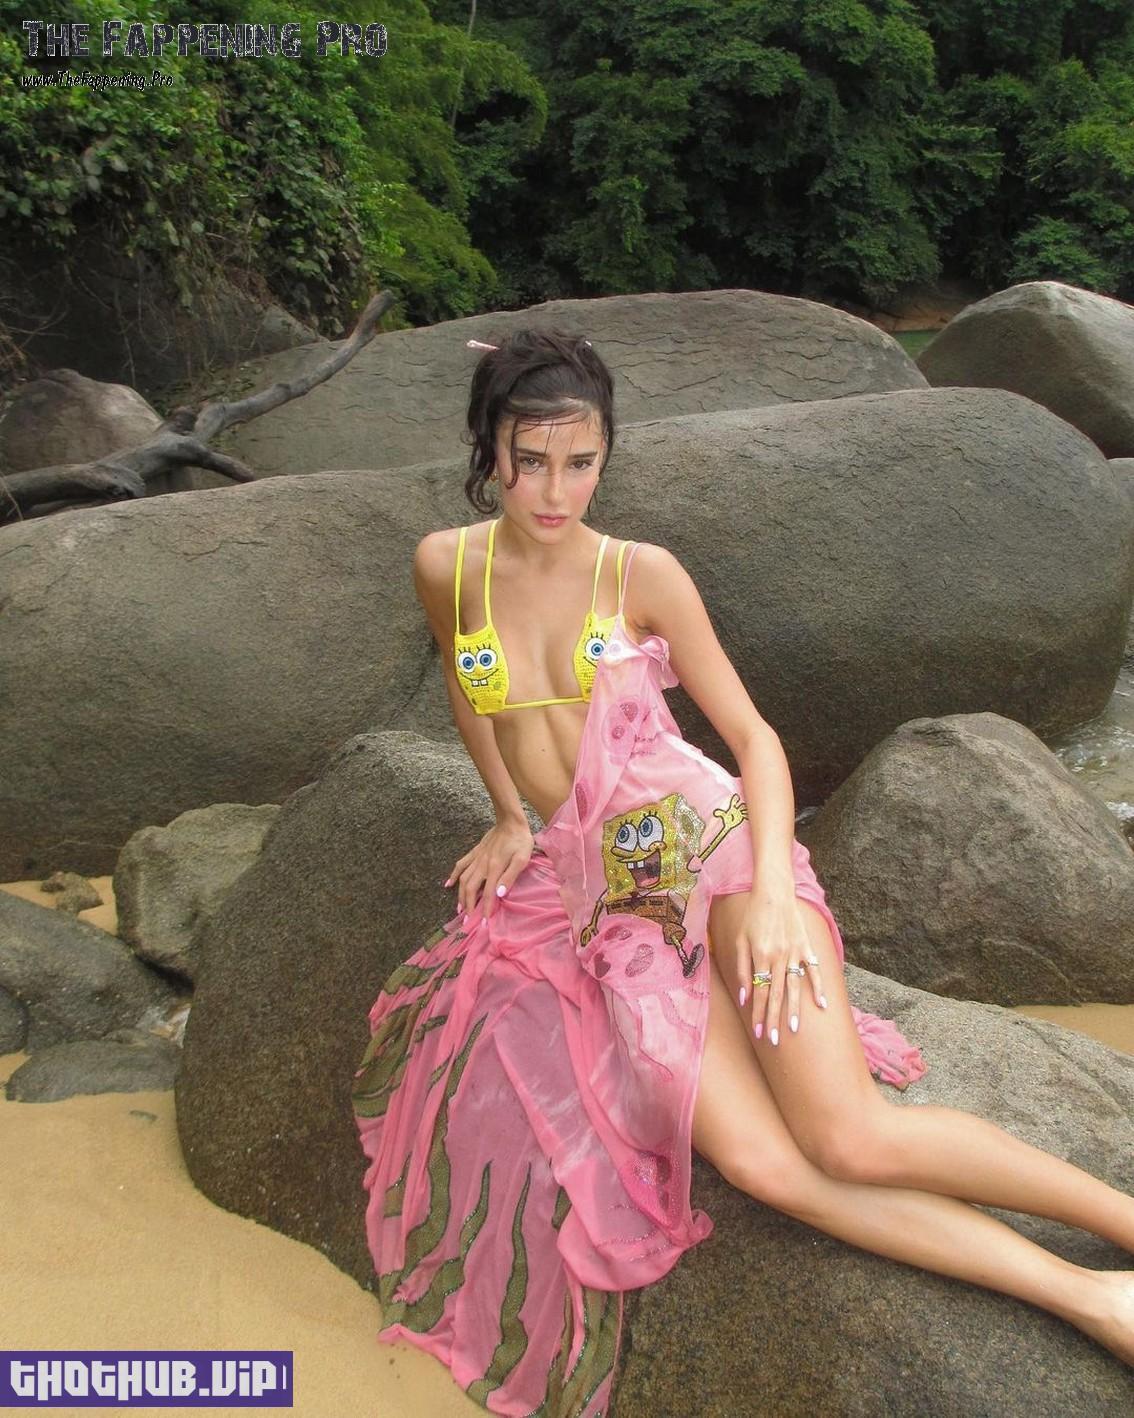 Livia Nunes Marques In SpongeBob Bikini 5 Photos